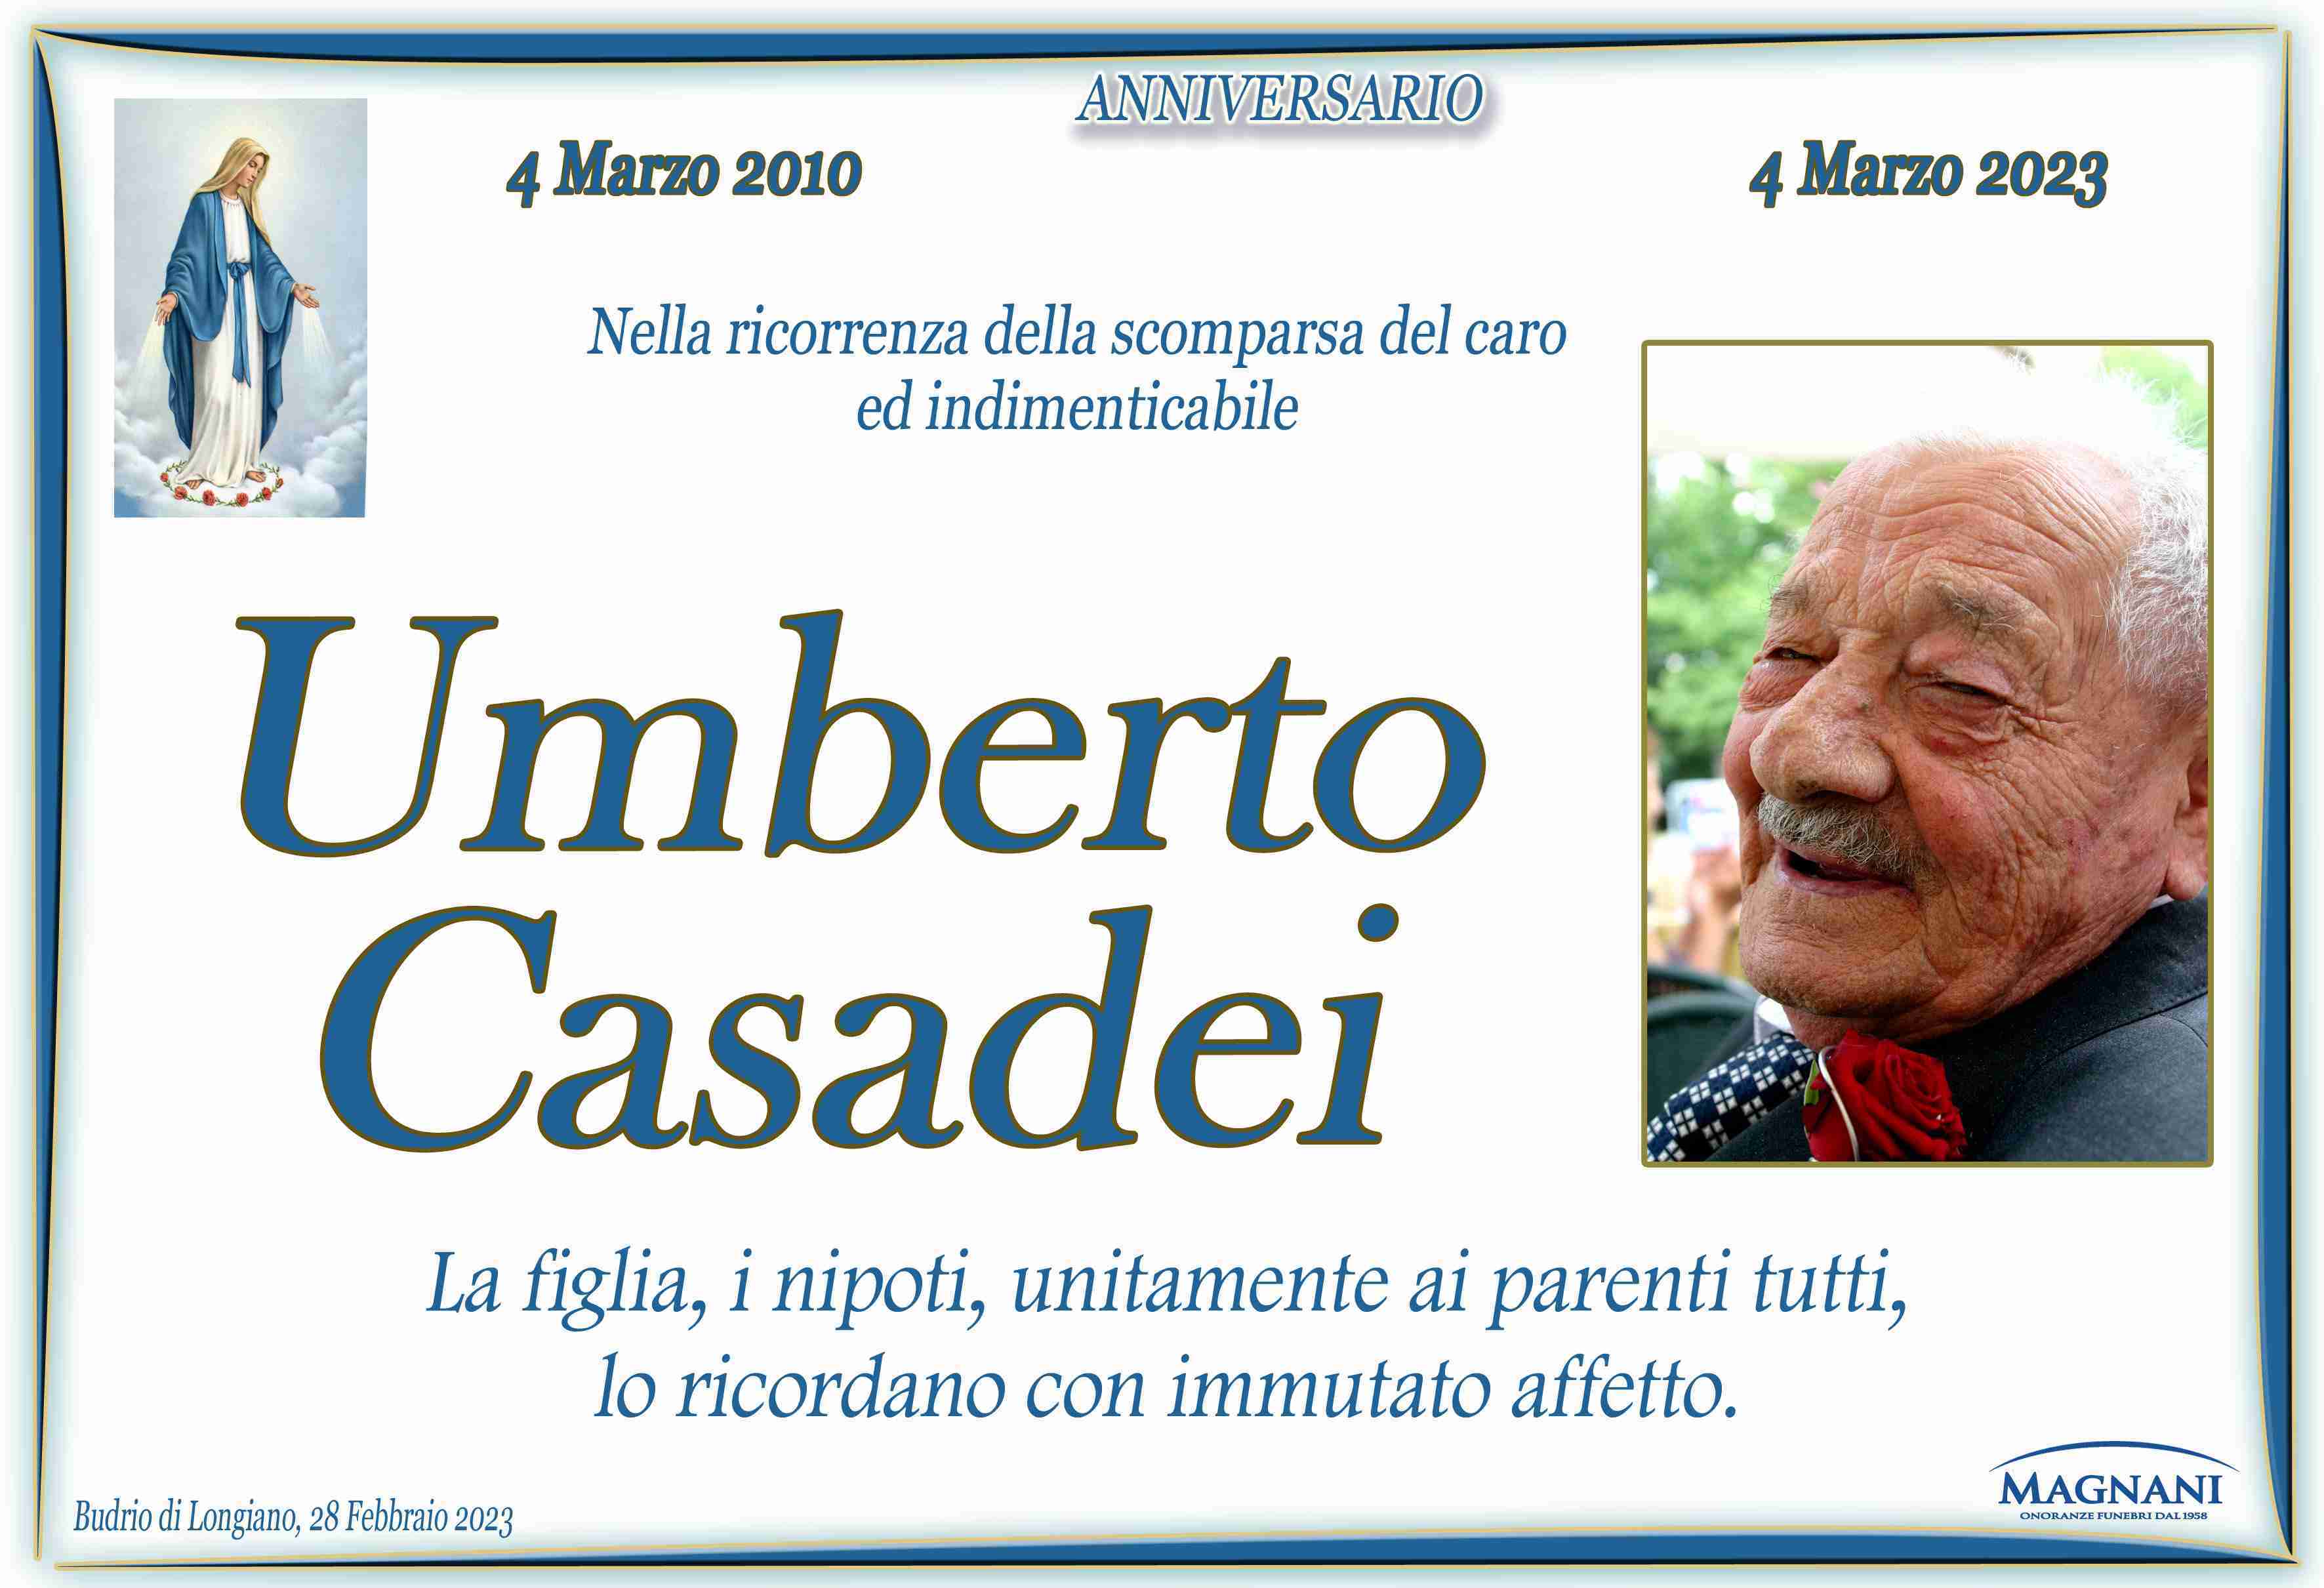 Umberto Casadei